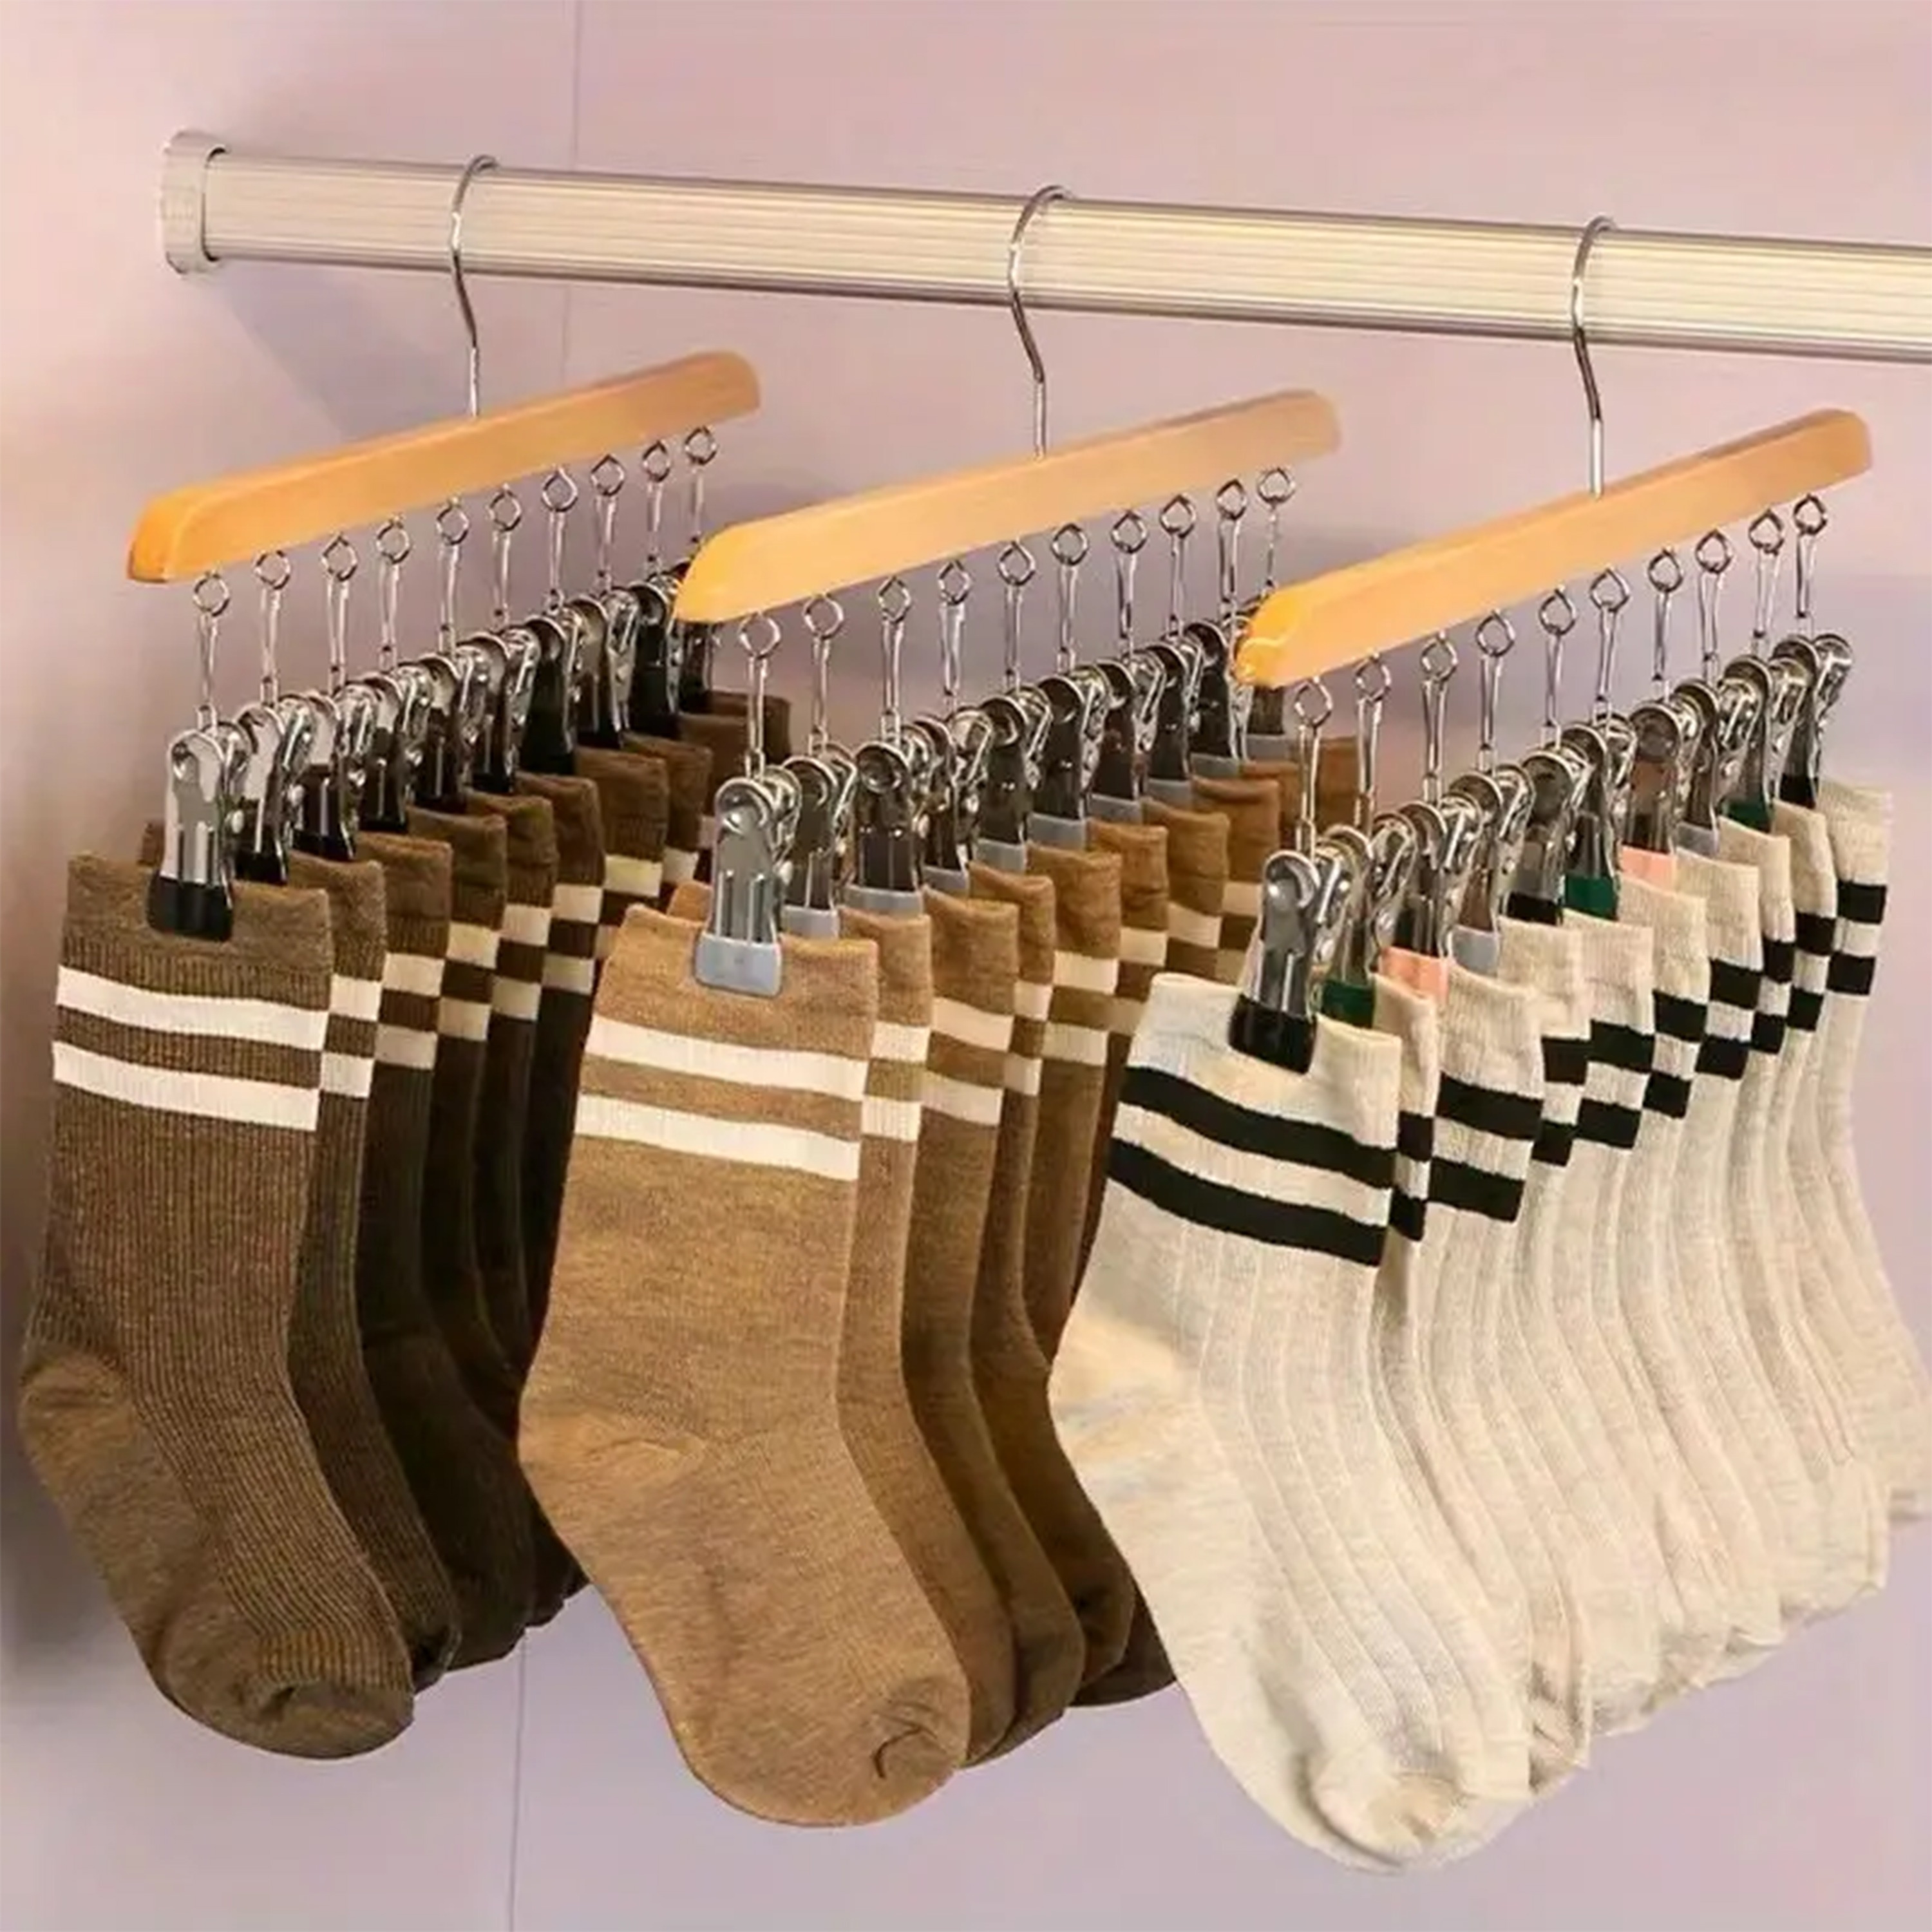 

1pc Multi-clips Legging Hanger, Hat Organizer, Durable Socks Drying Rack For Ties, Scarves, Belts, Household Storage Organizer For Bathroom, Bedroom, Closet, Wardrobe, Home, Dorm